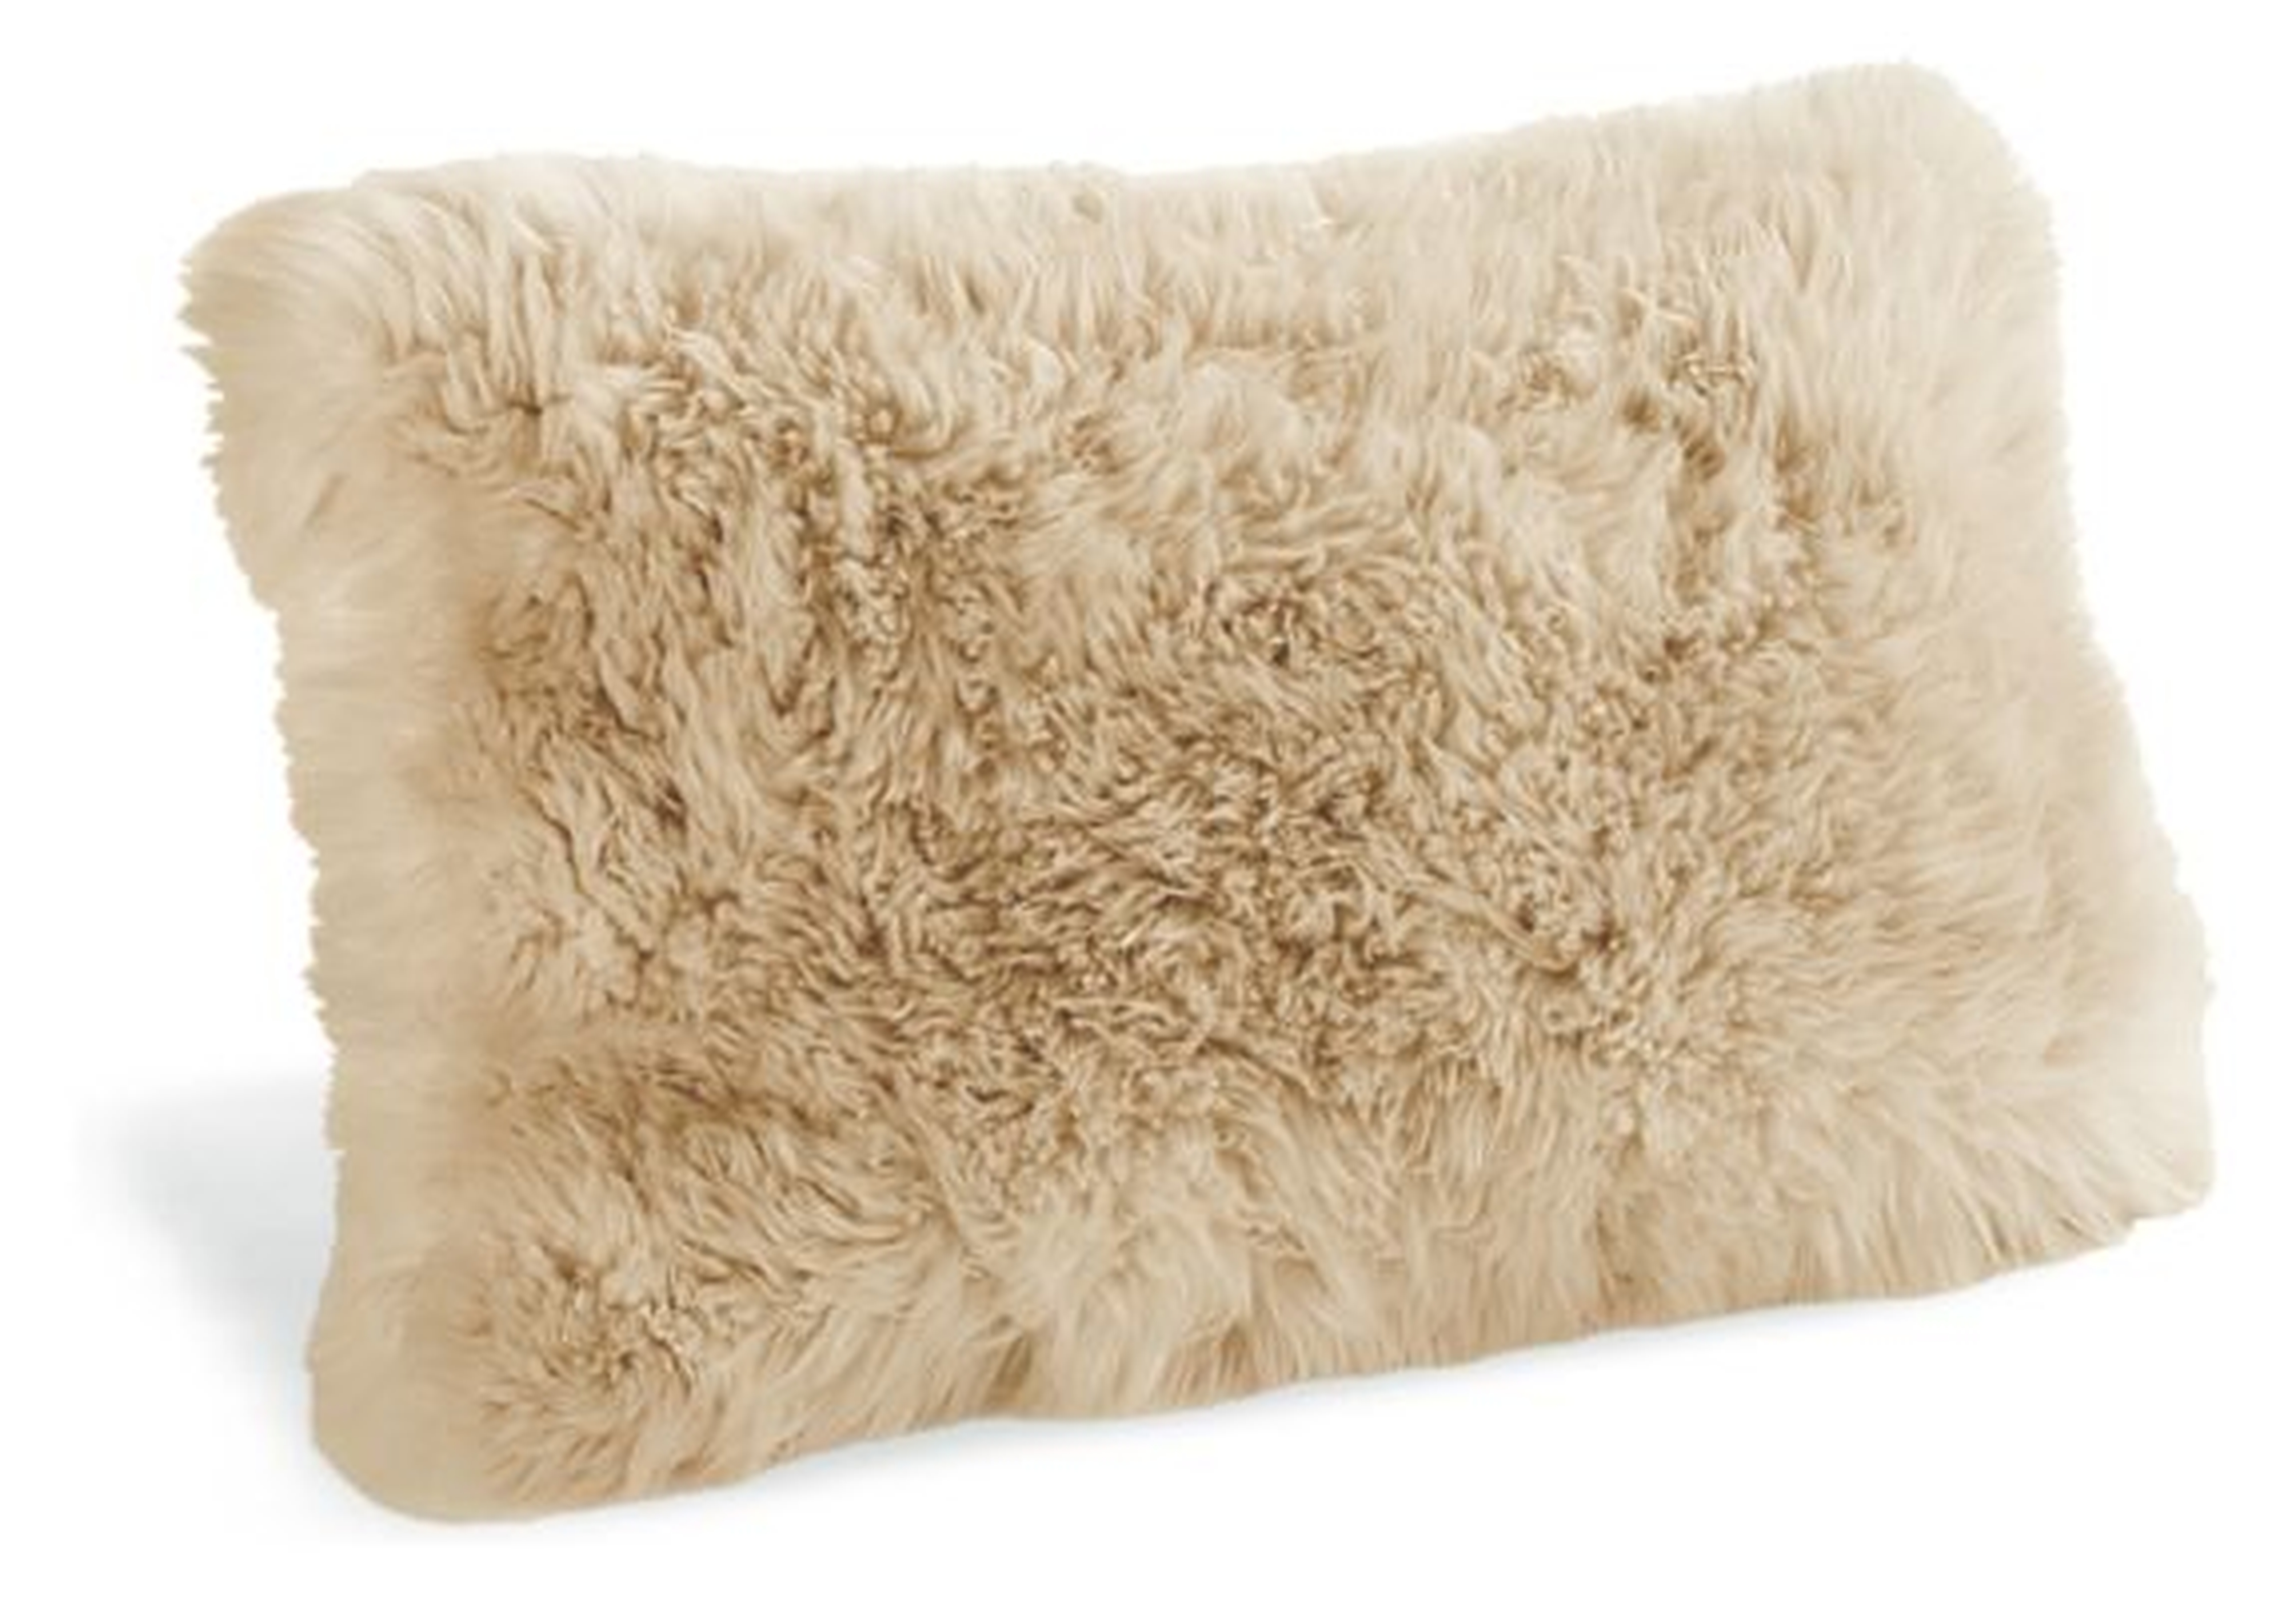 Sheepskin Pillows - Stone,  22"W x 11"H (Polyester fill) - Room & Board